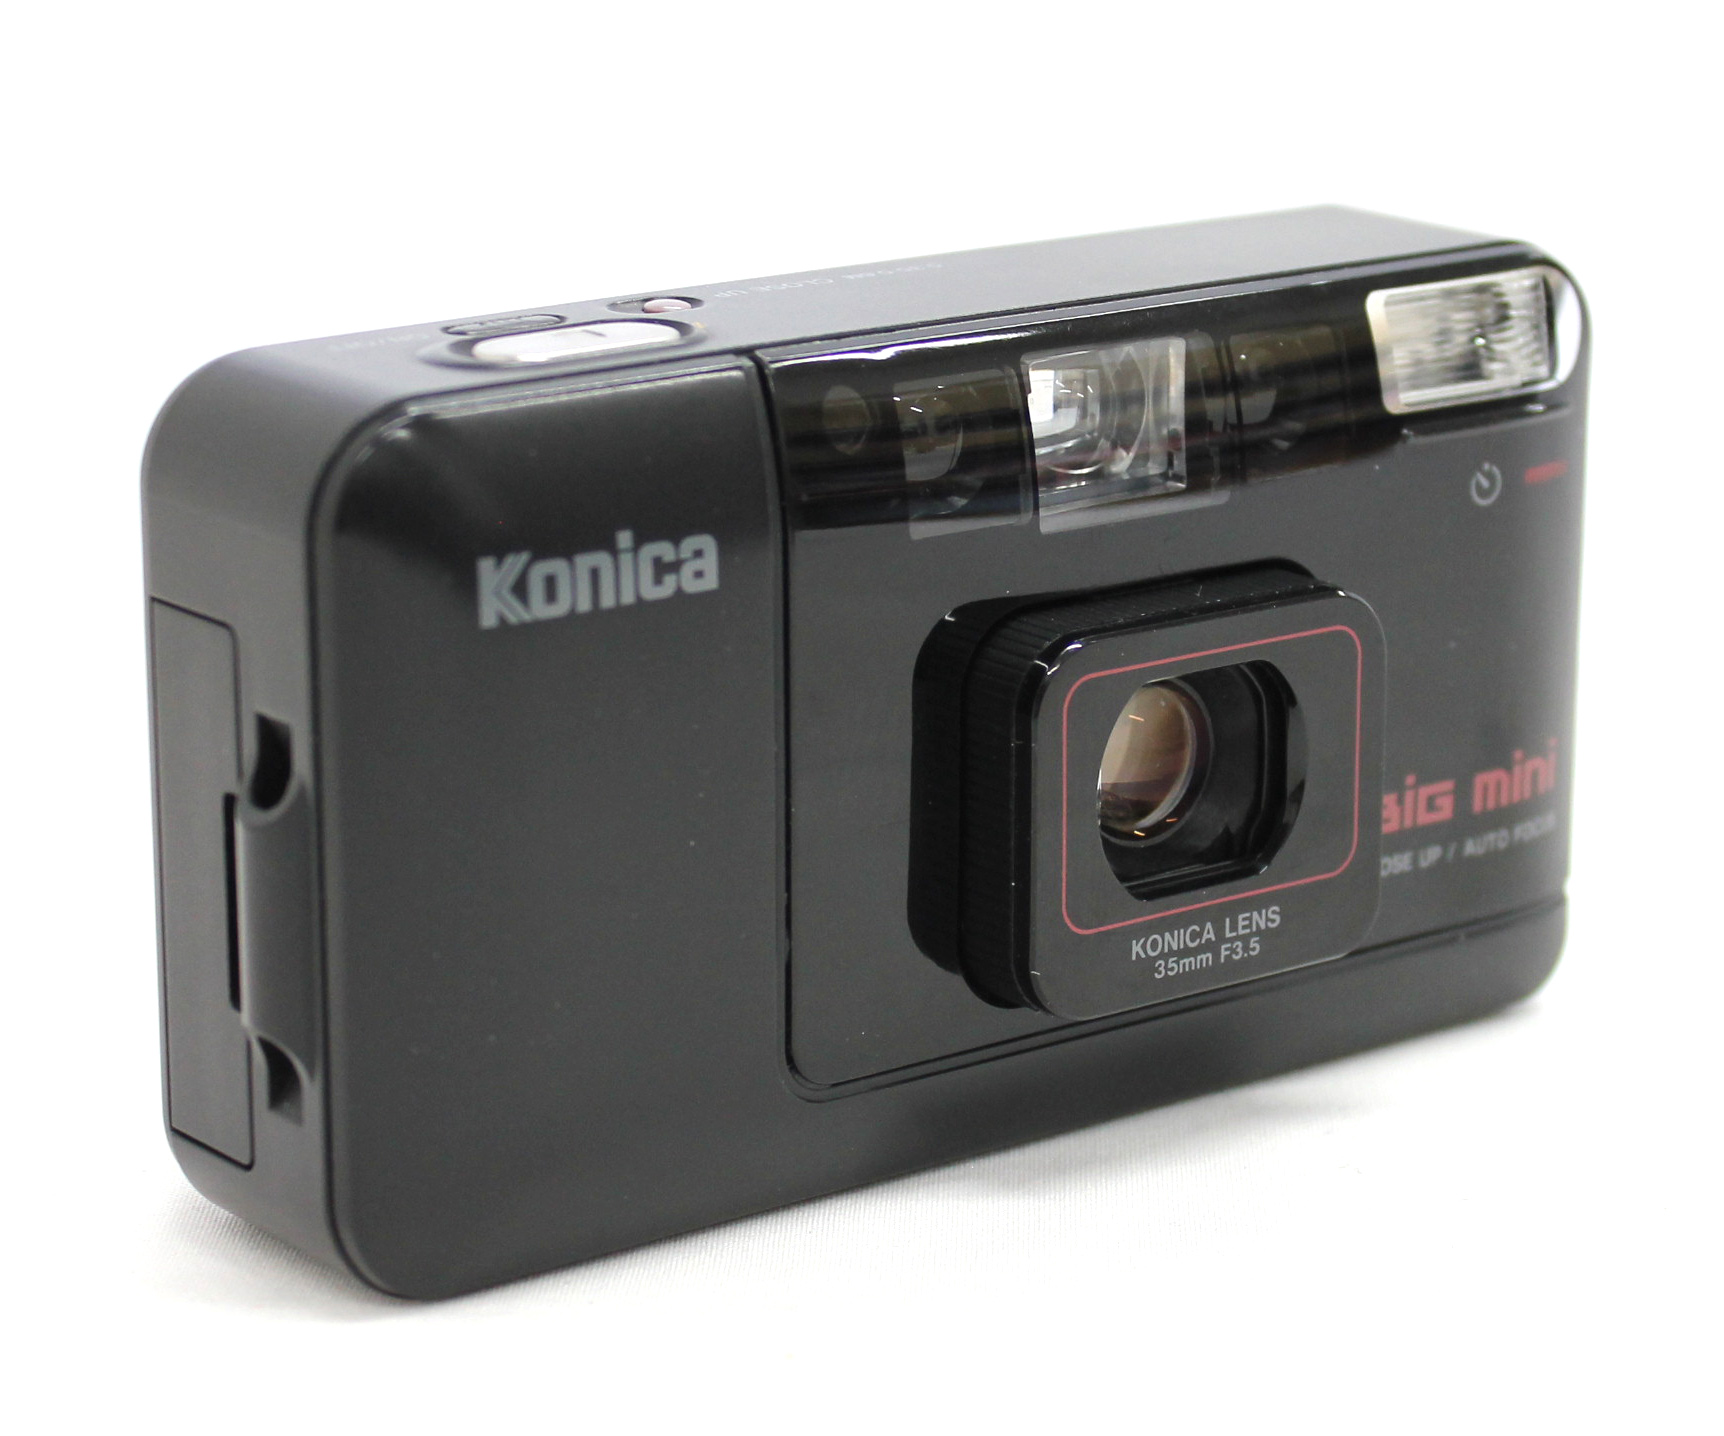 Konica Big Mini 35mm Point & Shoot Film Camera w/Case from Japan